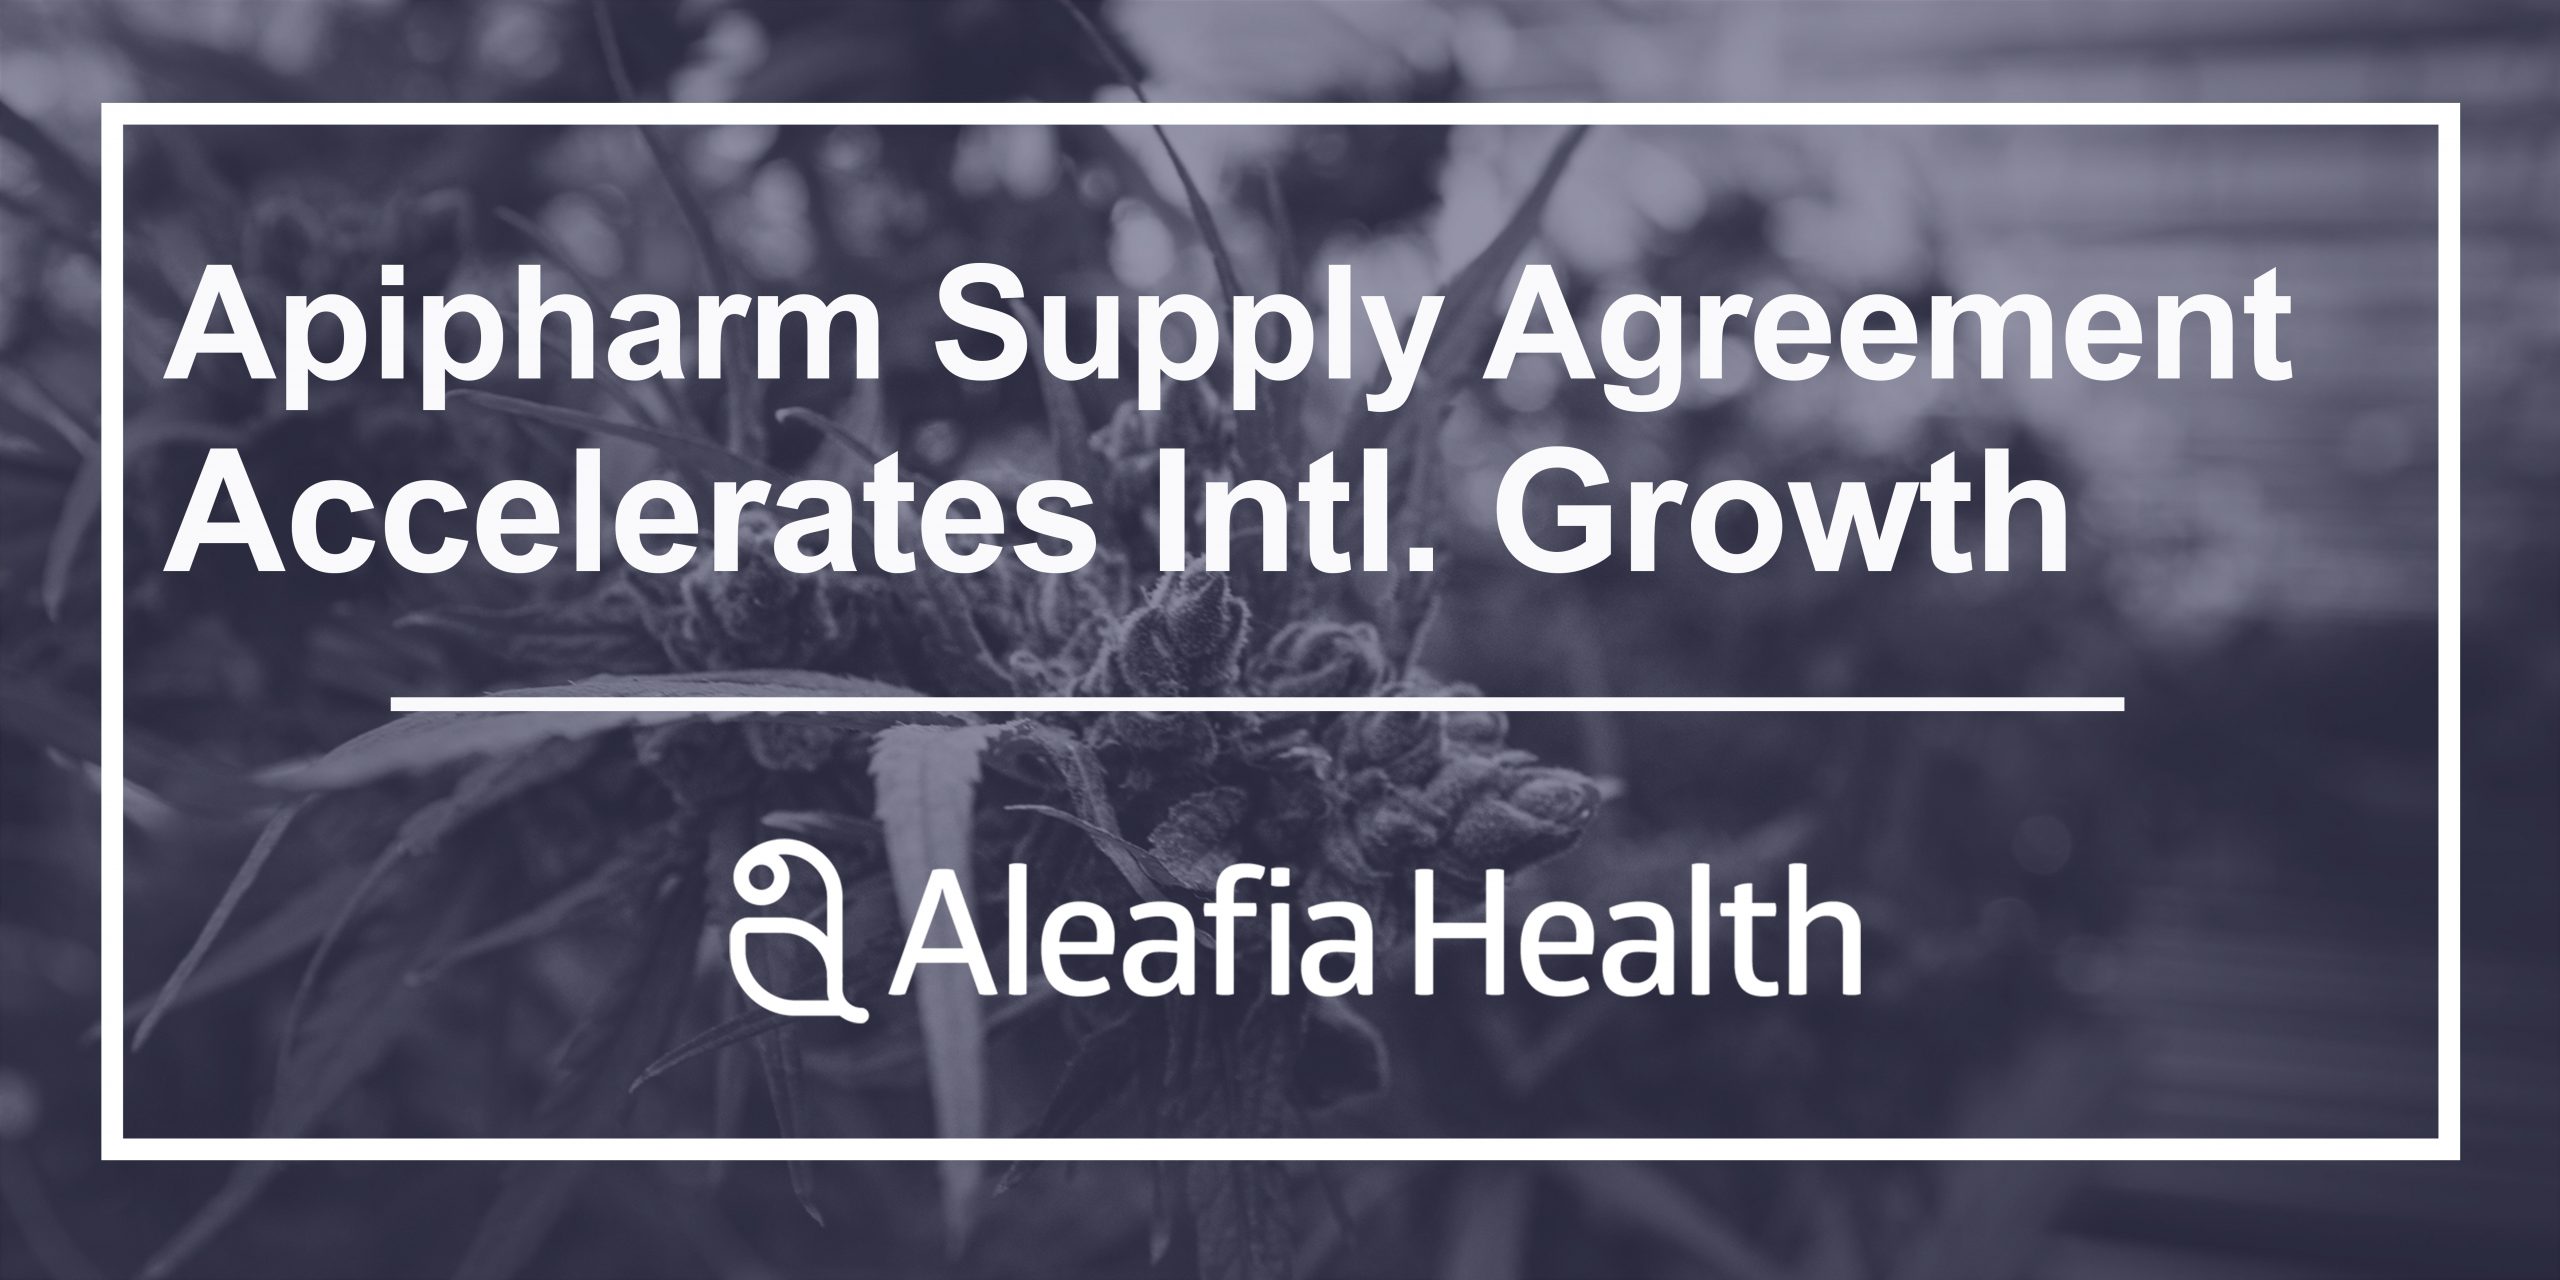 Aleafia Health Enters Definitive Supply Agreement with European Pharmaceutical Producer Apipharm